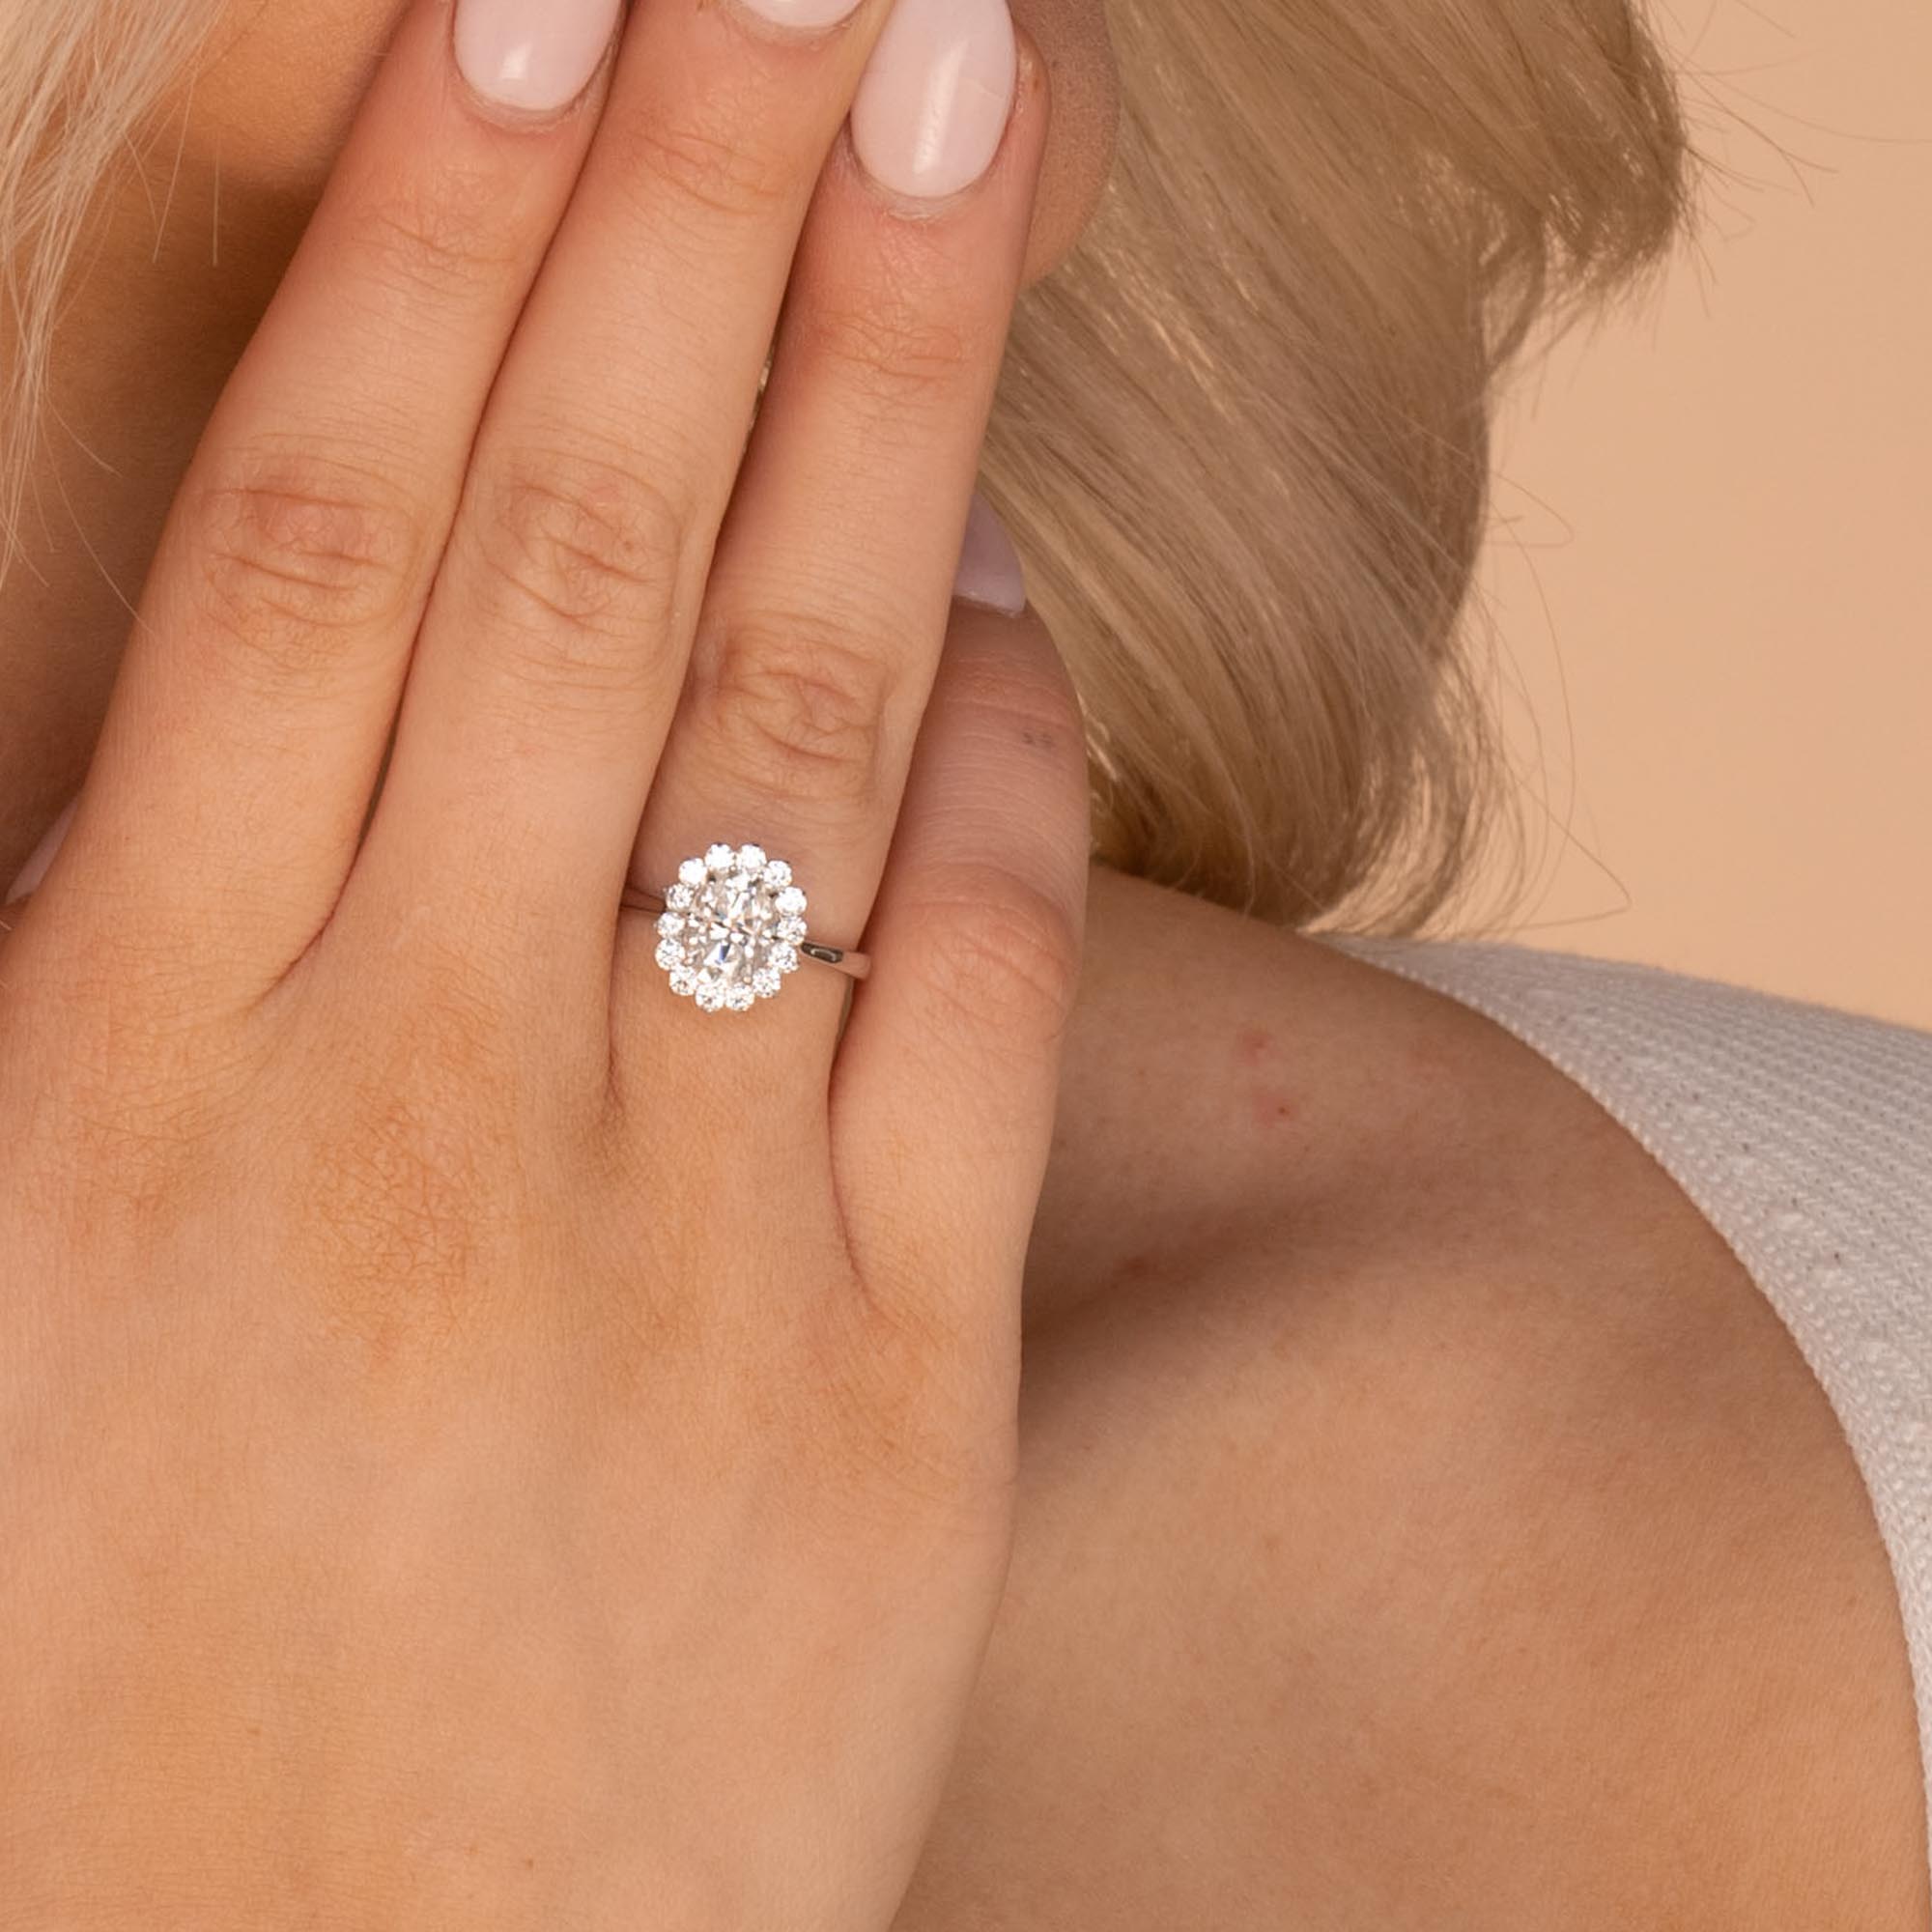 1.5 ct The Lady Moissanite Diamond Ring